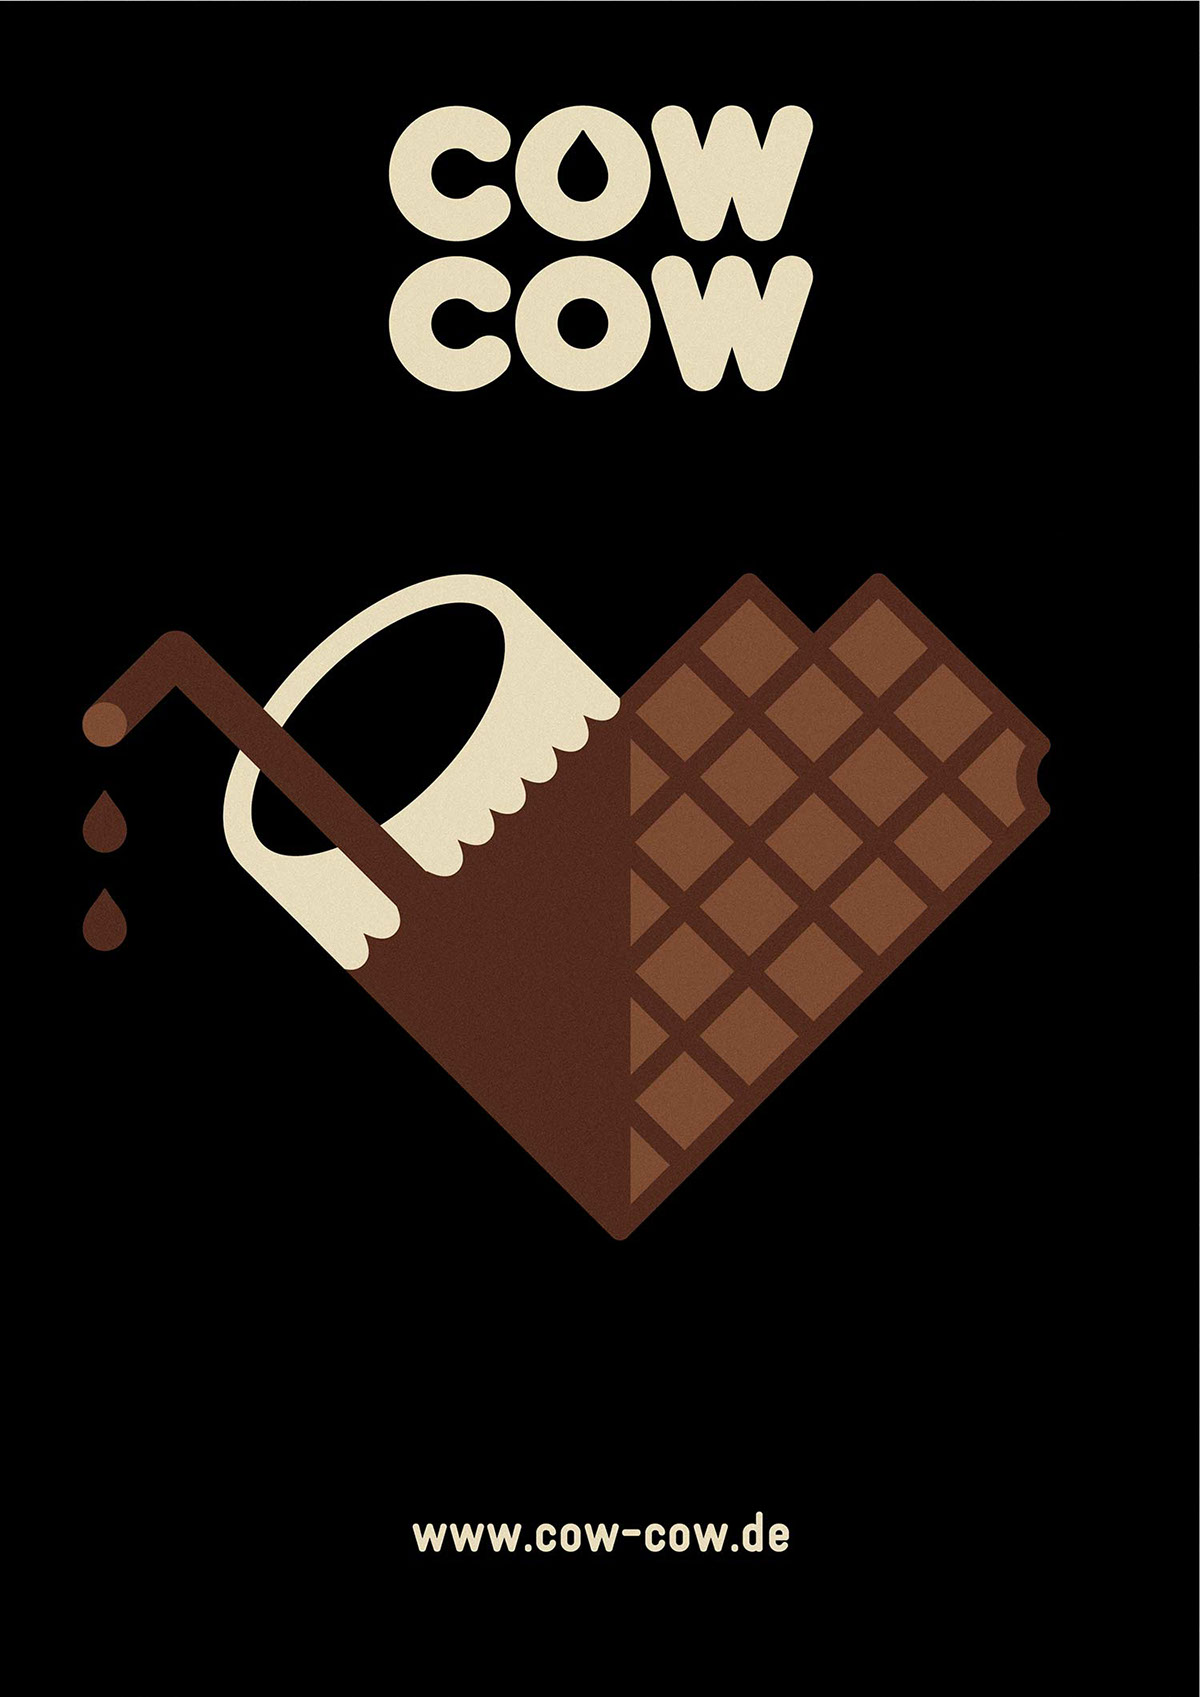 CowCow milk rocketandwink redesign german choco simple poster